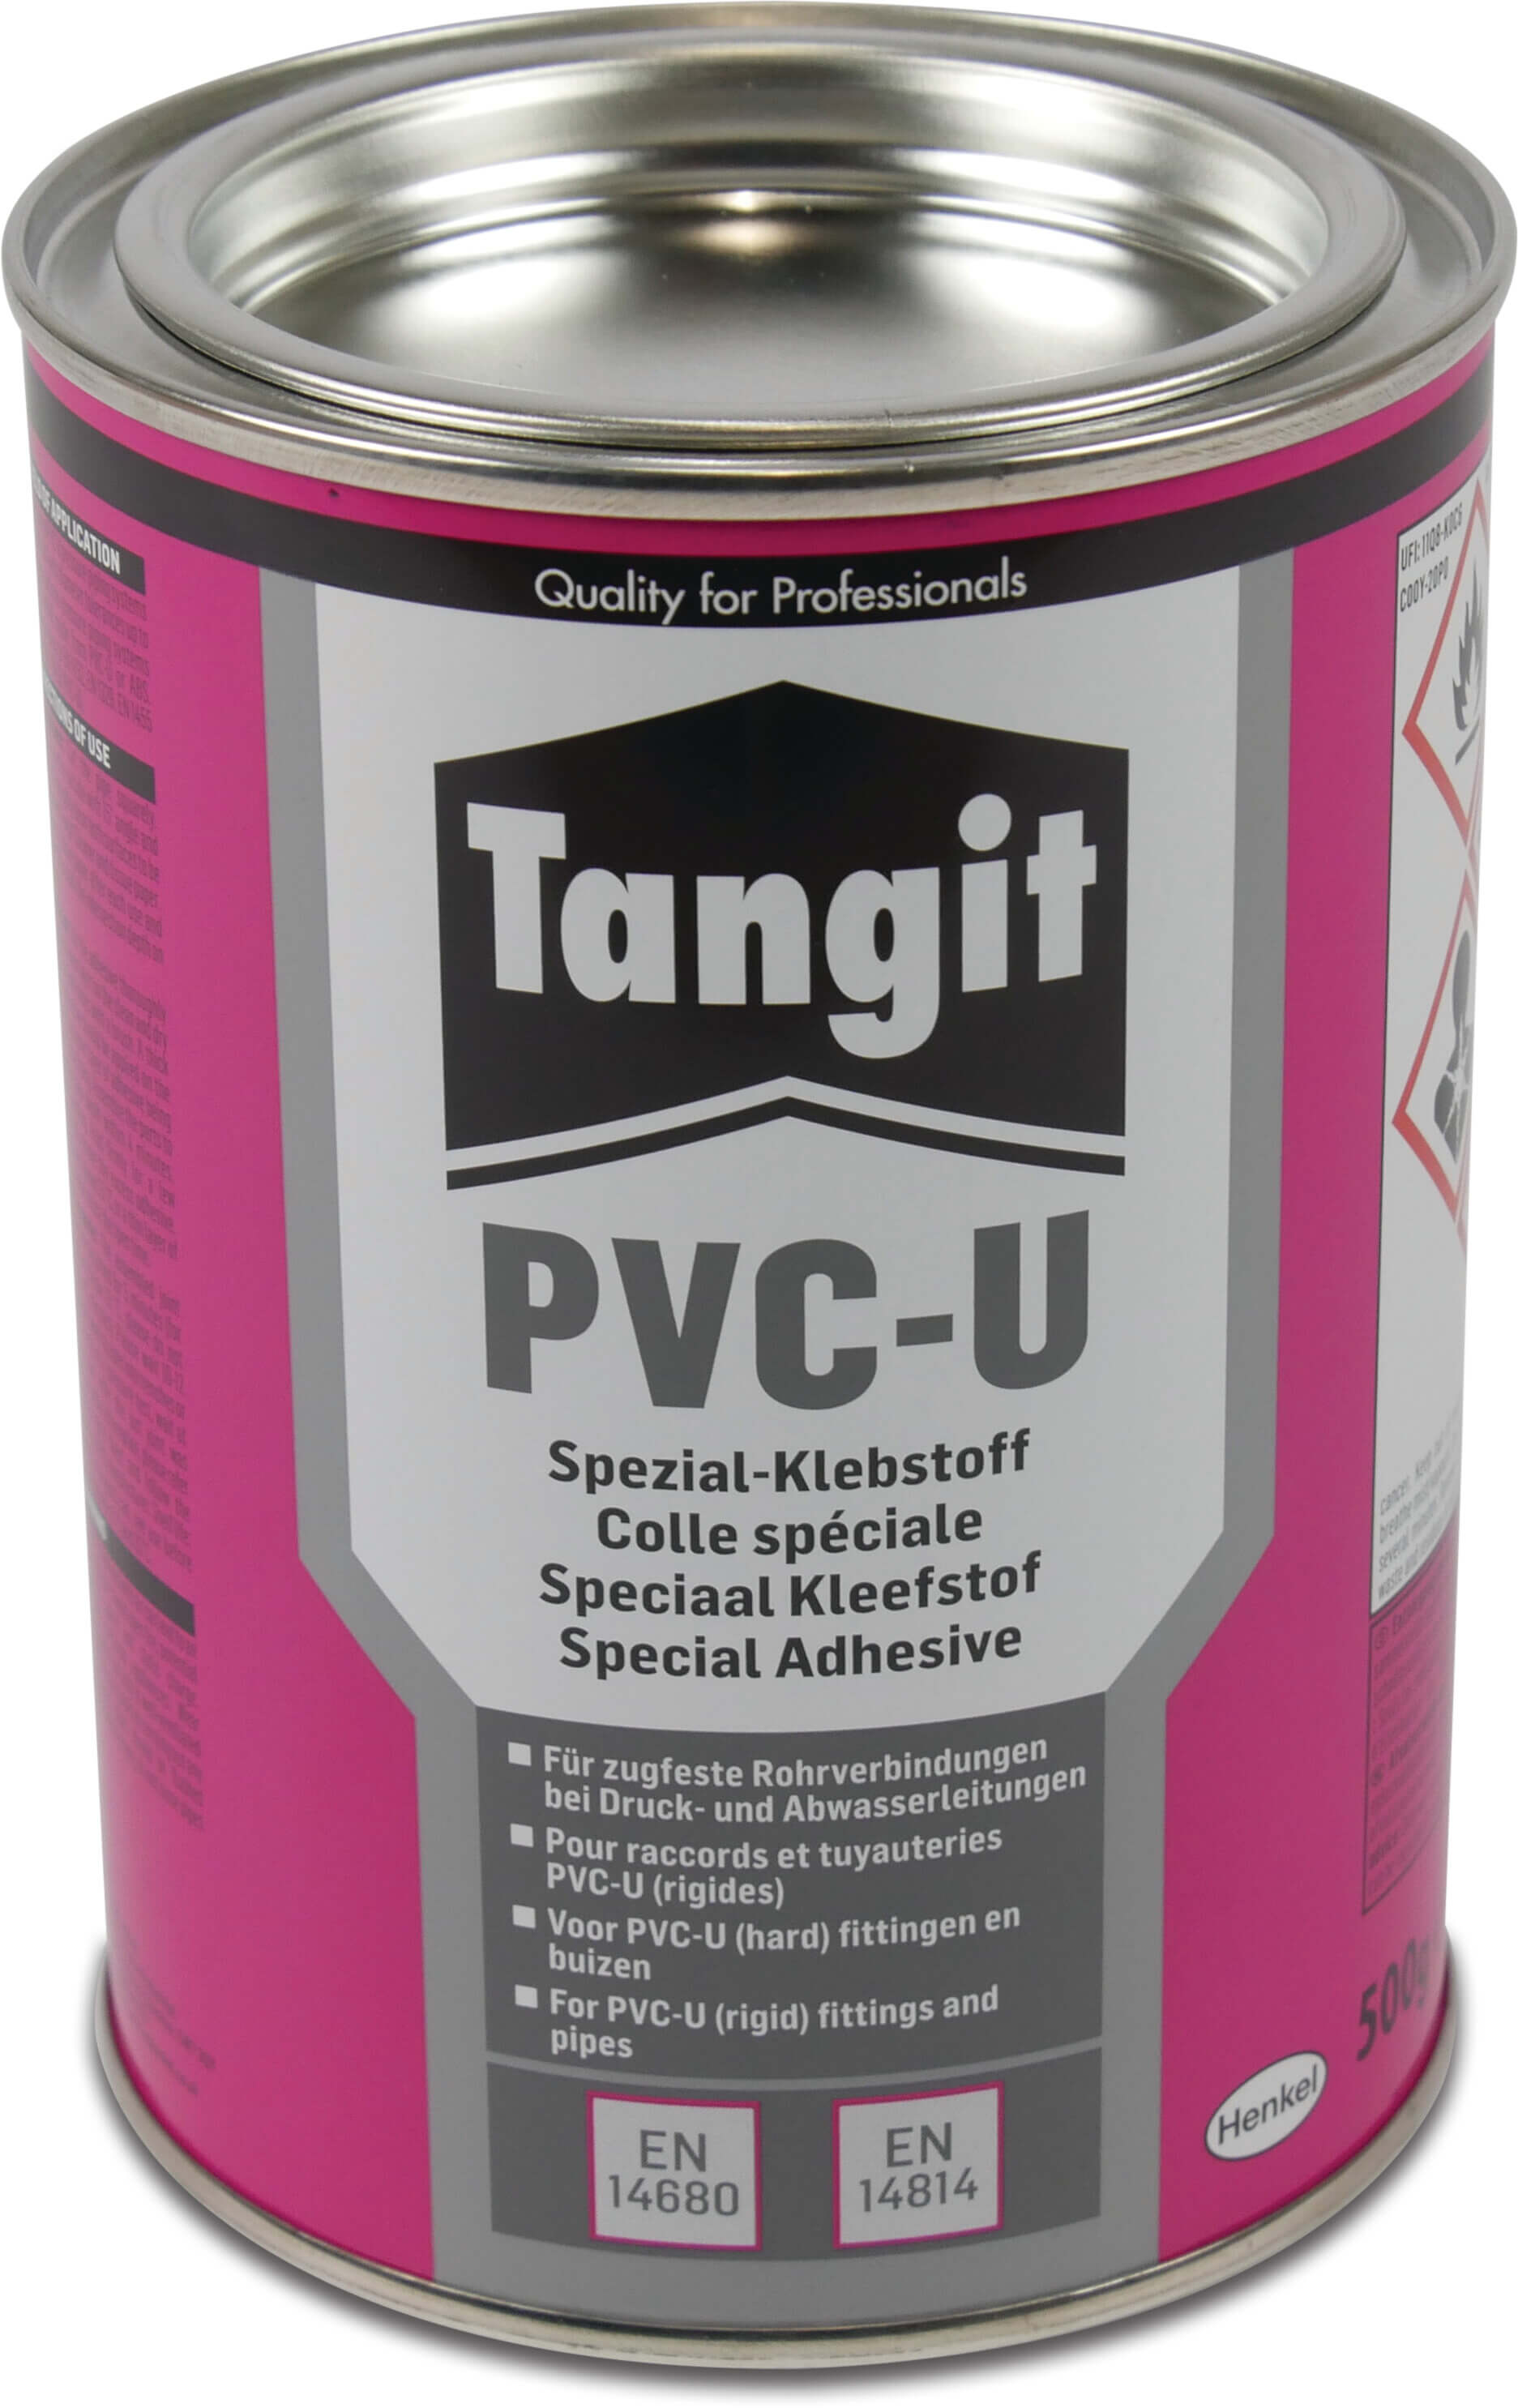 Tangit PVC-lijm 500g zonder kwast KIWA type All Pressure label EN/DE/NL/FR